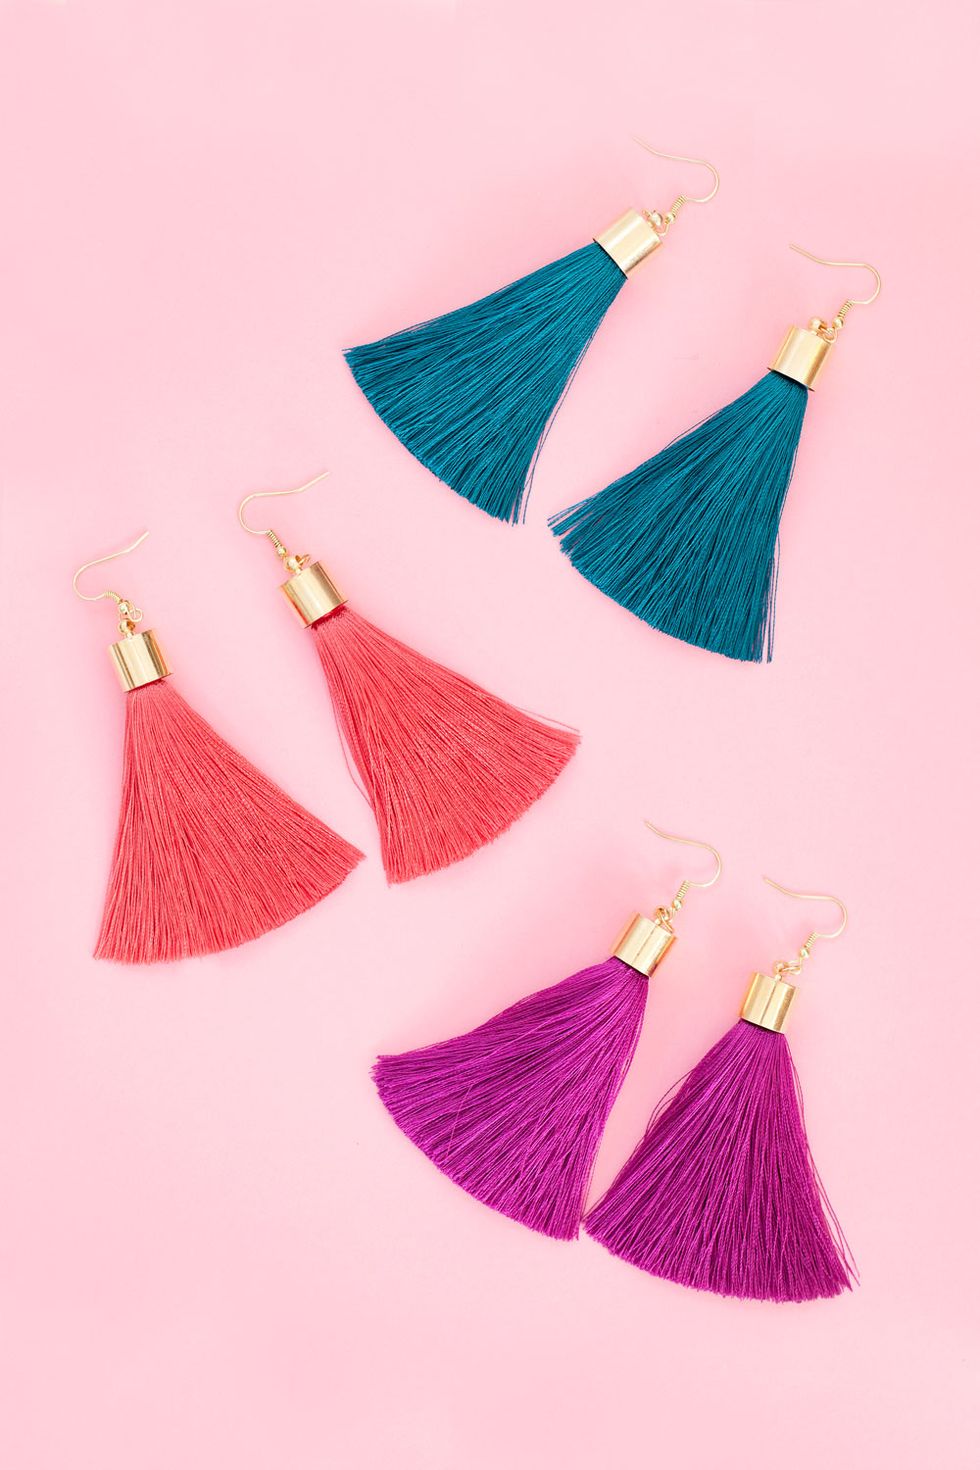 adult craft ideas, tassel earrings, blue red and purple